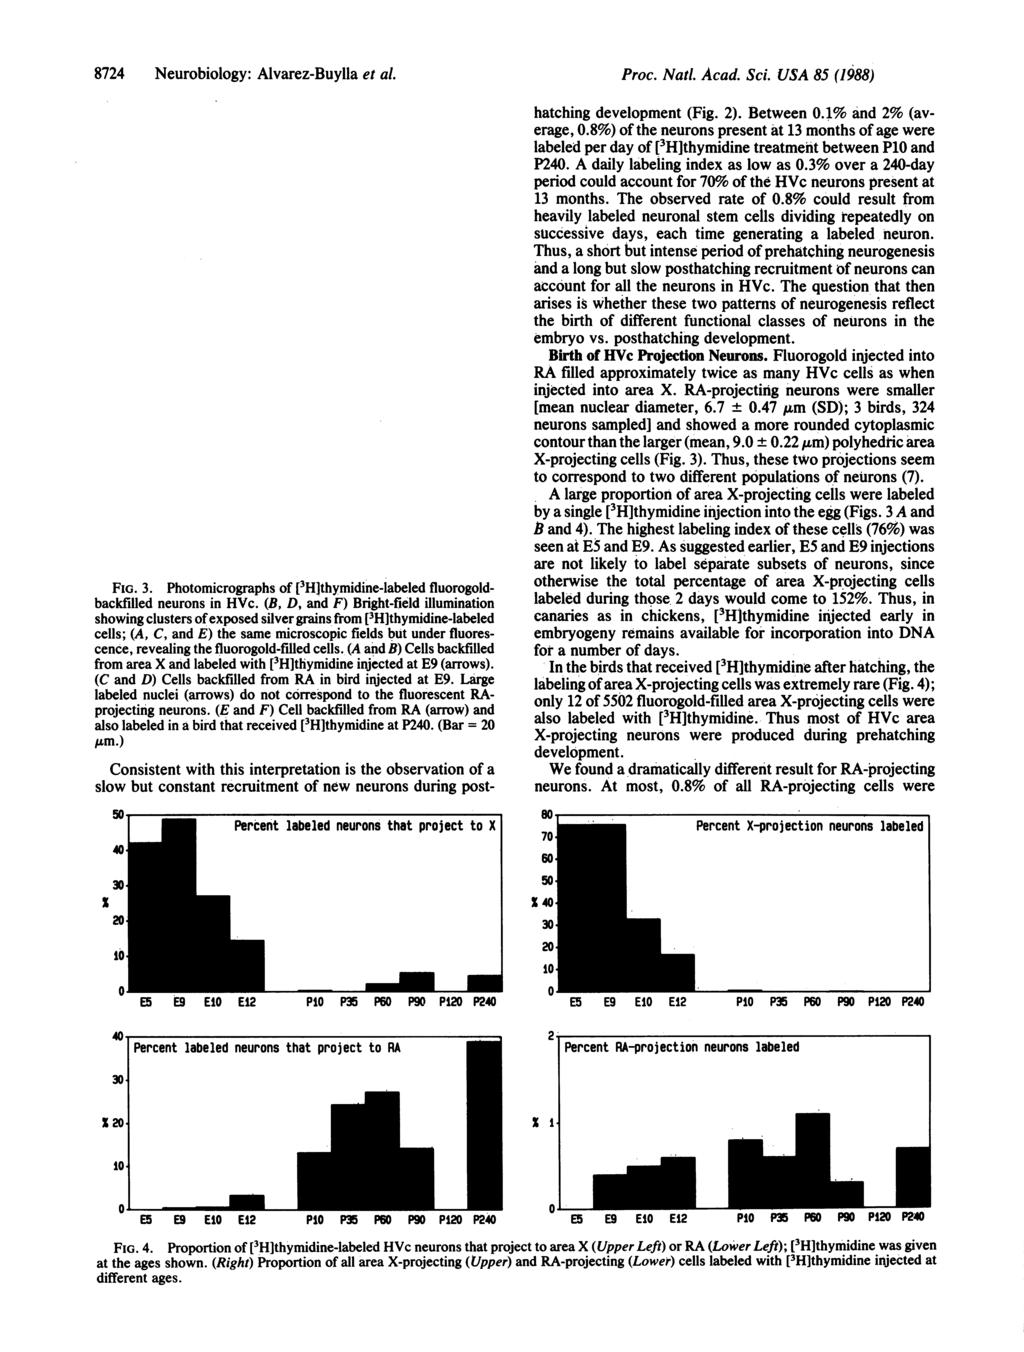 8724 Neurobiology: Alvarez-Buylla et al. B.c..*.4 D44 4 4 Photomicrographs of [3Hlthymidin'e-labeled fluorogold- FG. 3. backfilled neurons in HVc.